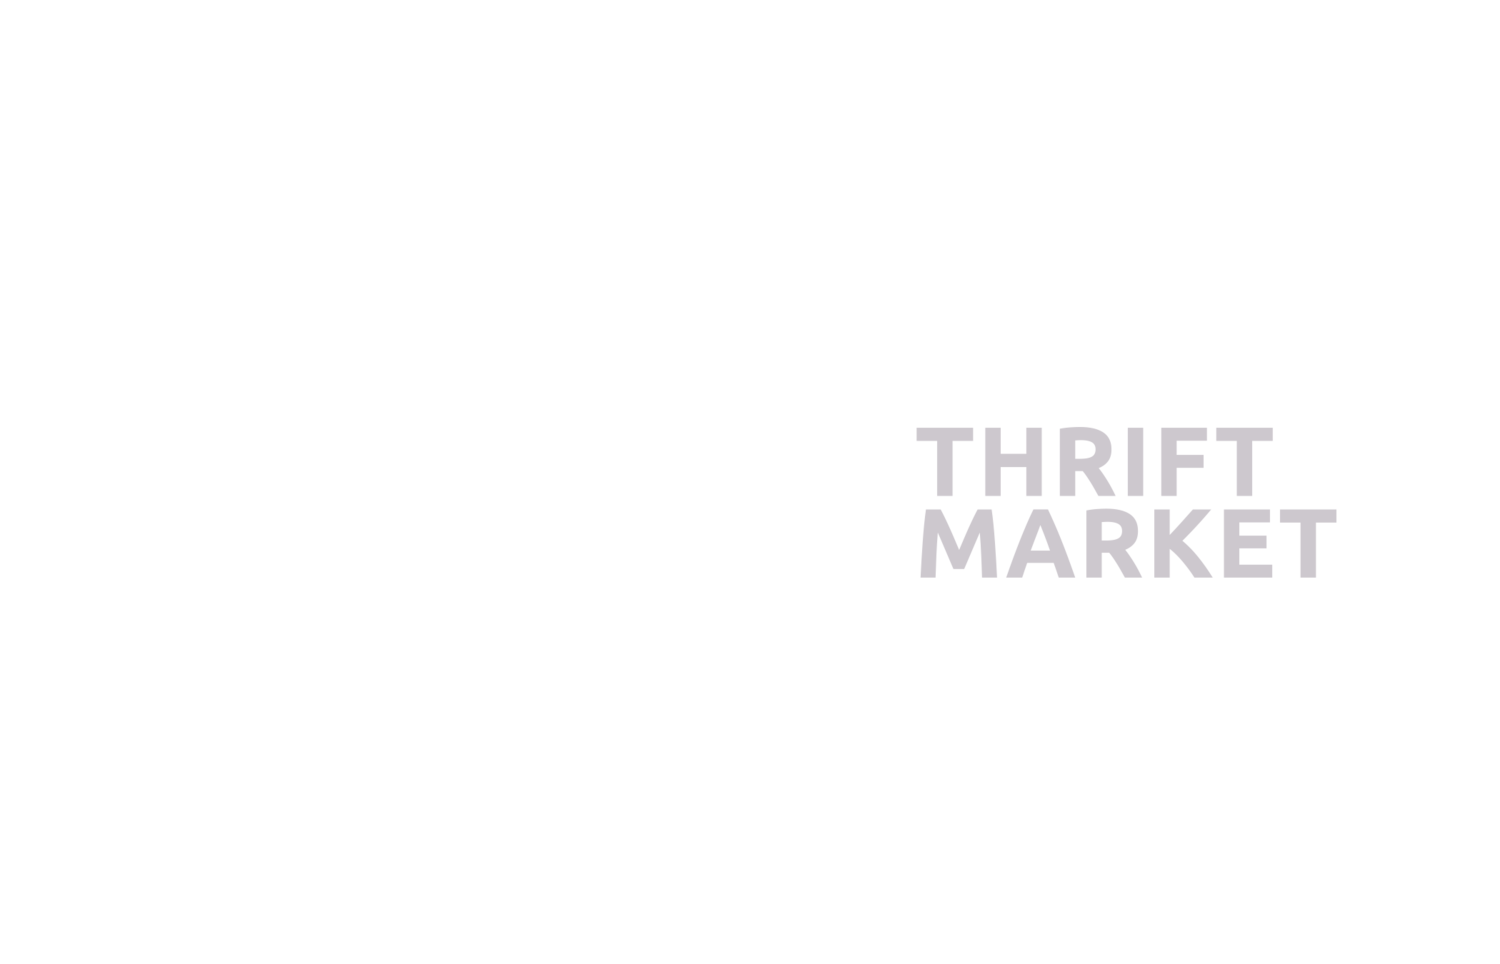 The One Shop Thrift Market